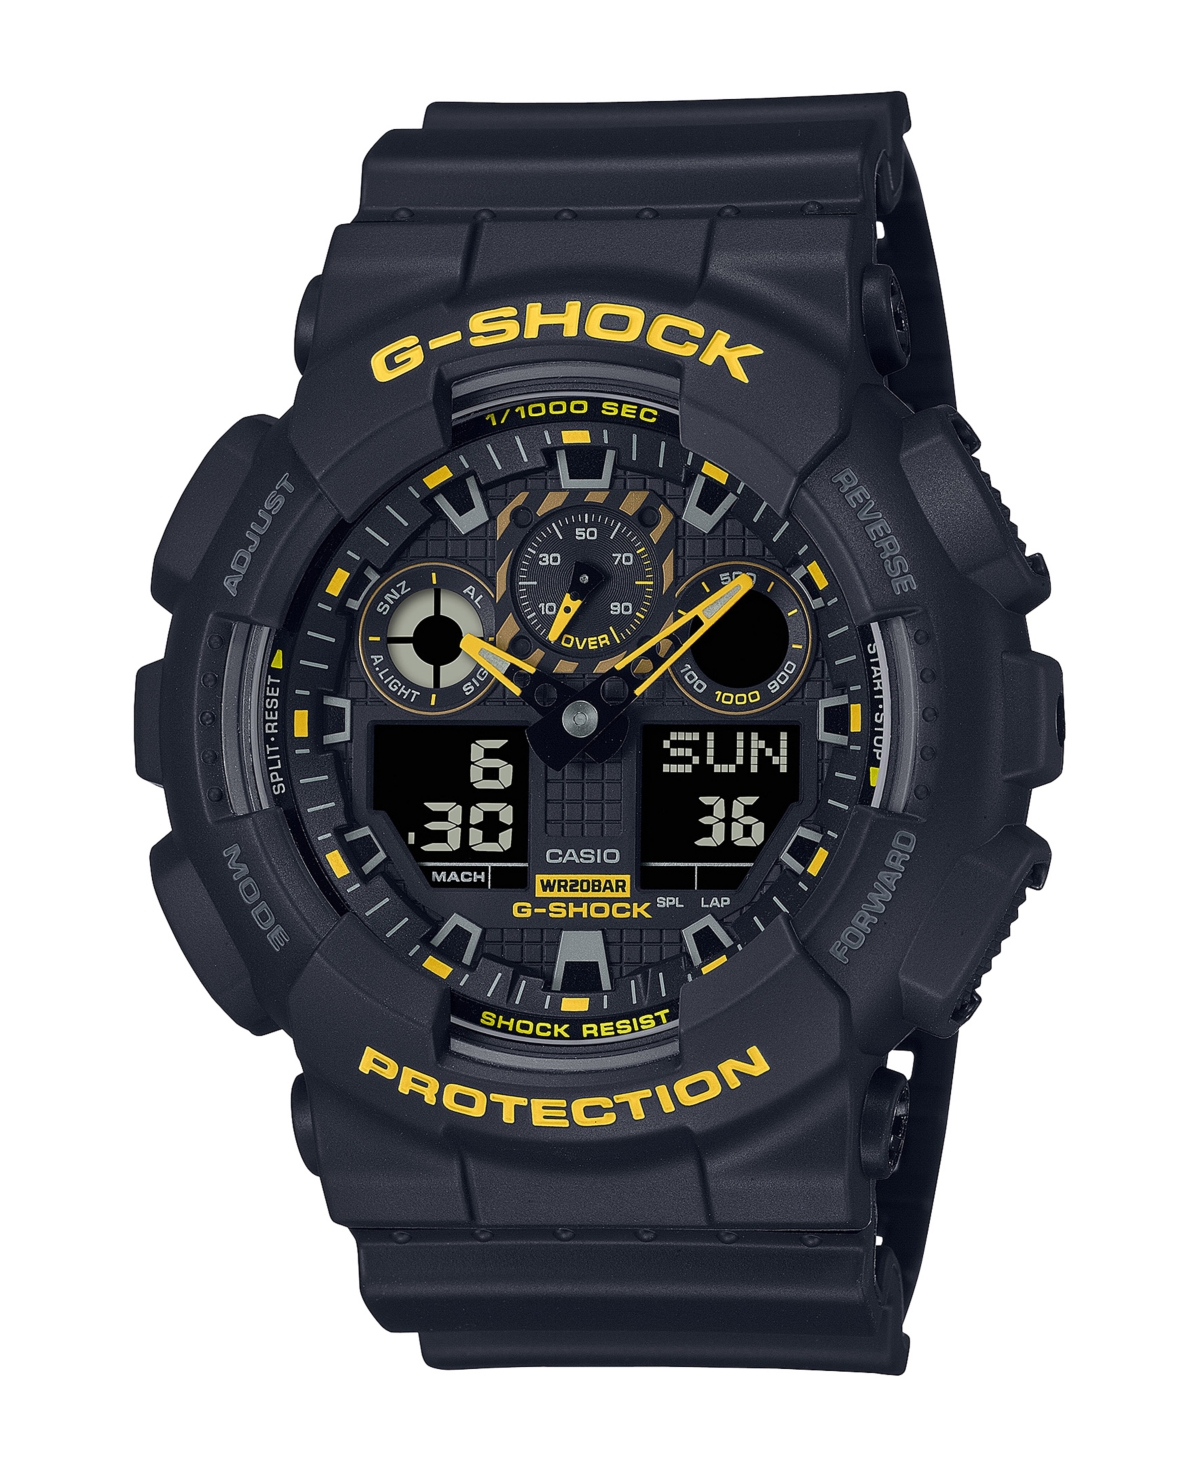 G-shock Men's Analog Digital Black Resin Watch 51.2mm, Ga100cy-1a